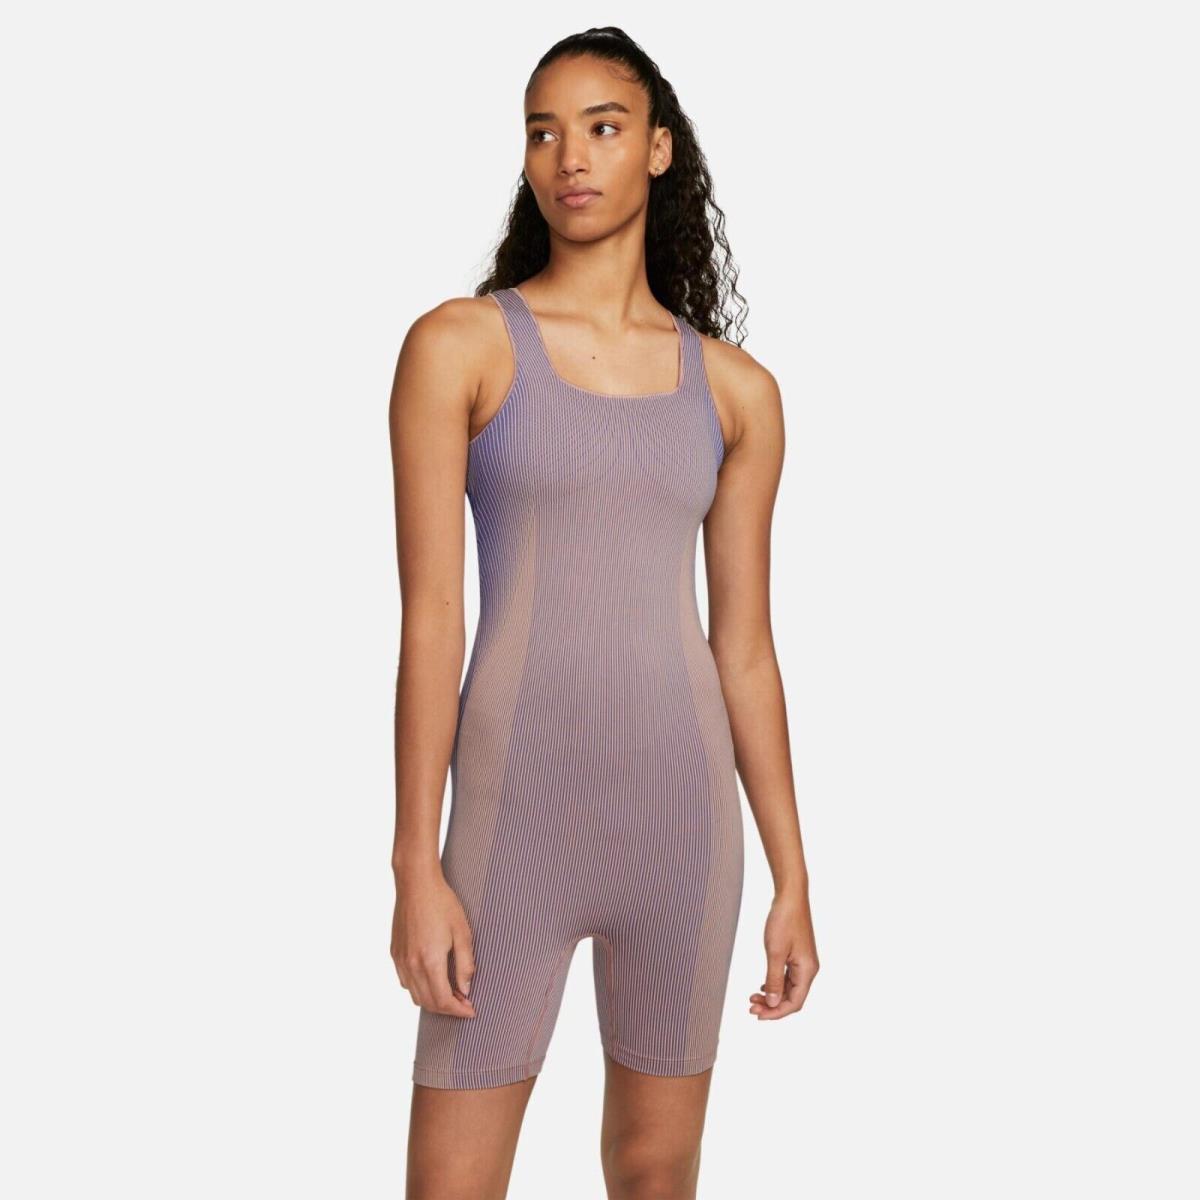 Nike Jumpsuit Yoga Dri Fit Adv Reveal Romper Leotard Purple Apricot Shorts S